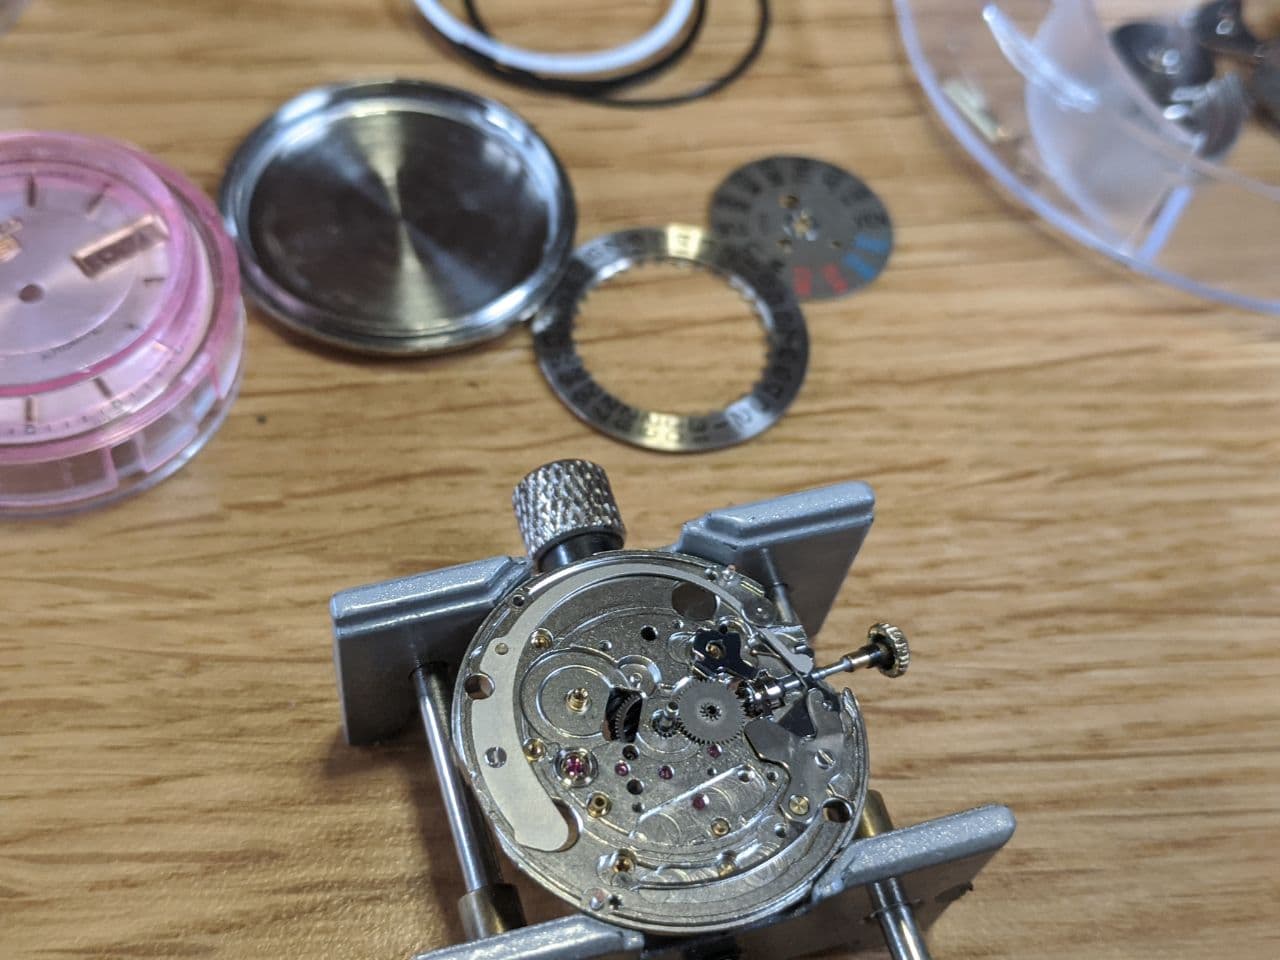 Watch Repair UK service - Assembly of watch movement DateJust Seiko 7009